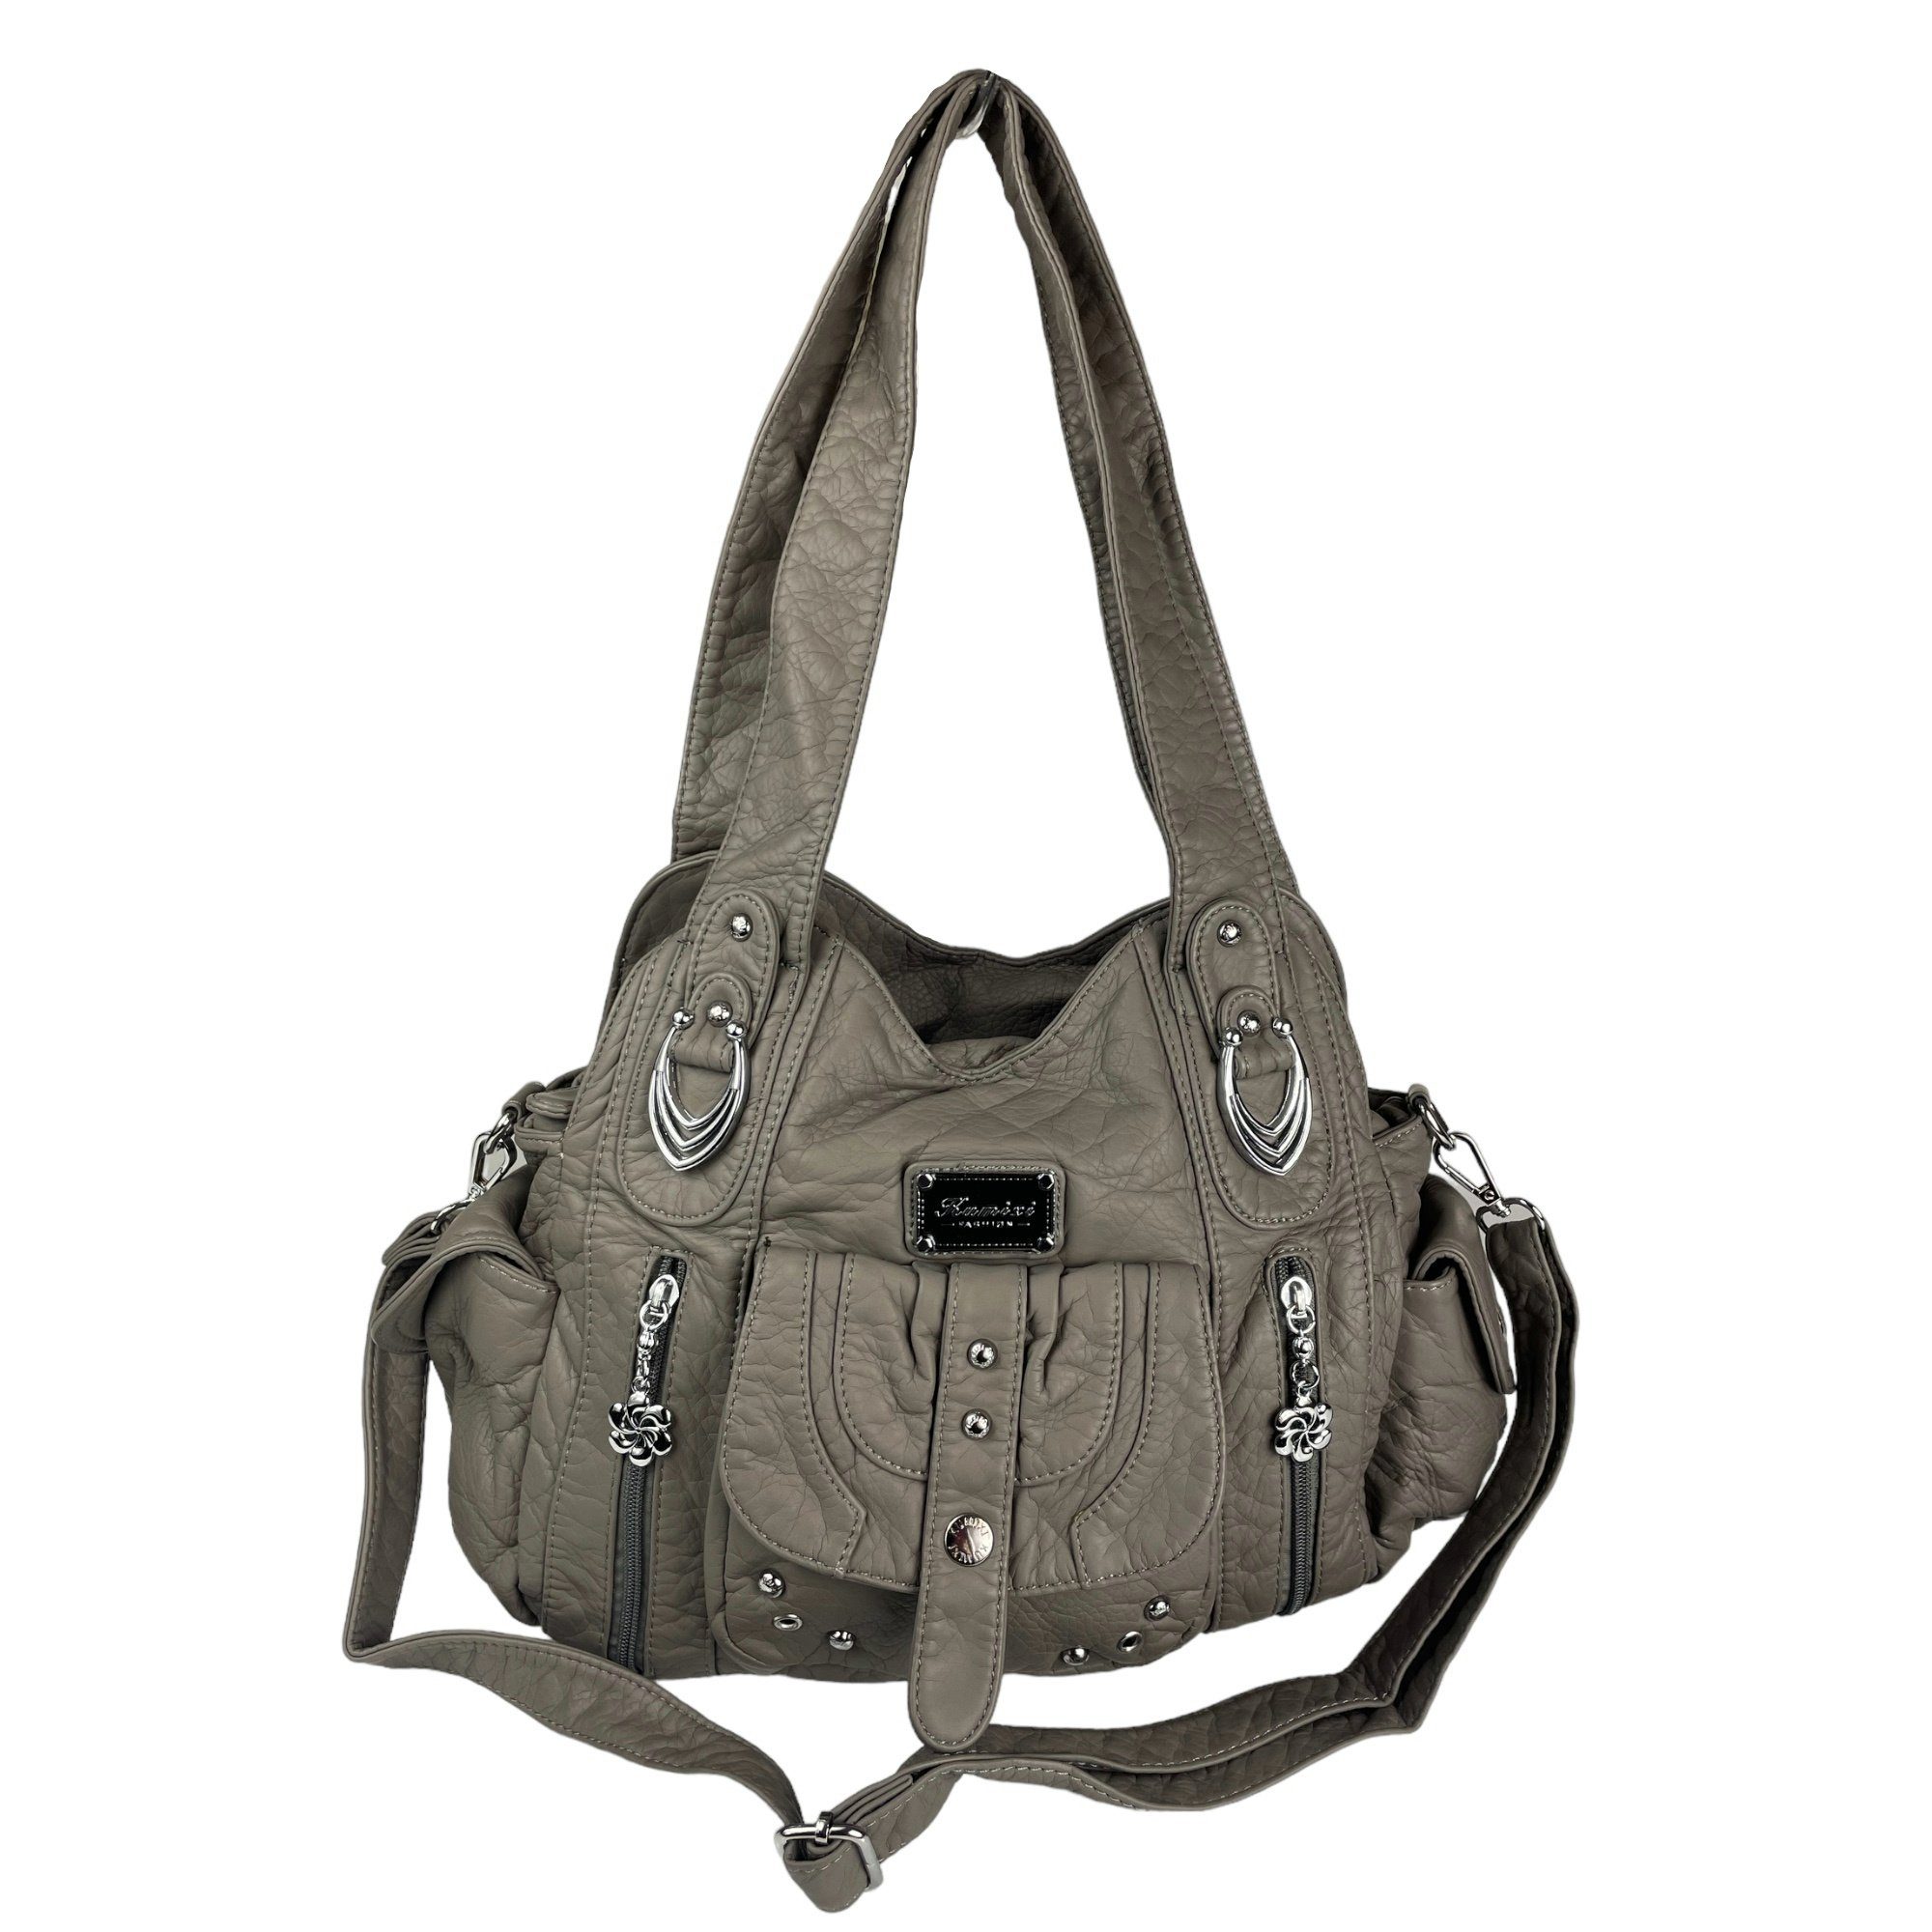 AKW22026, Handtasche abnehmbarer Schultertasche grau lange & Tragegriffe Schulterriemen, Taschen4life Damen Schultertasche